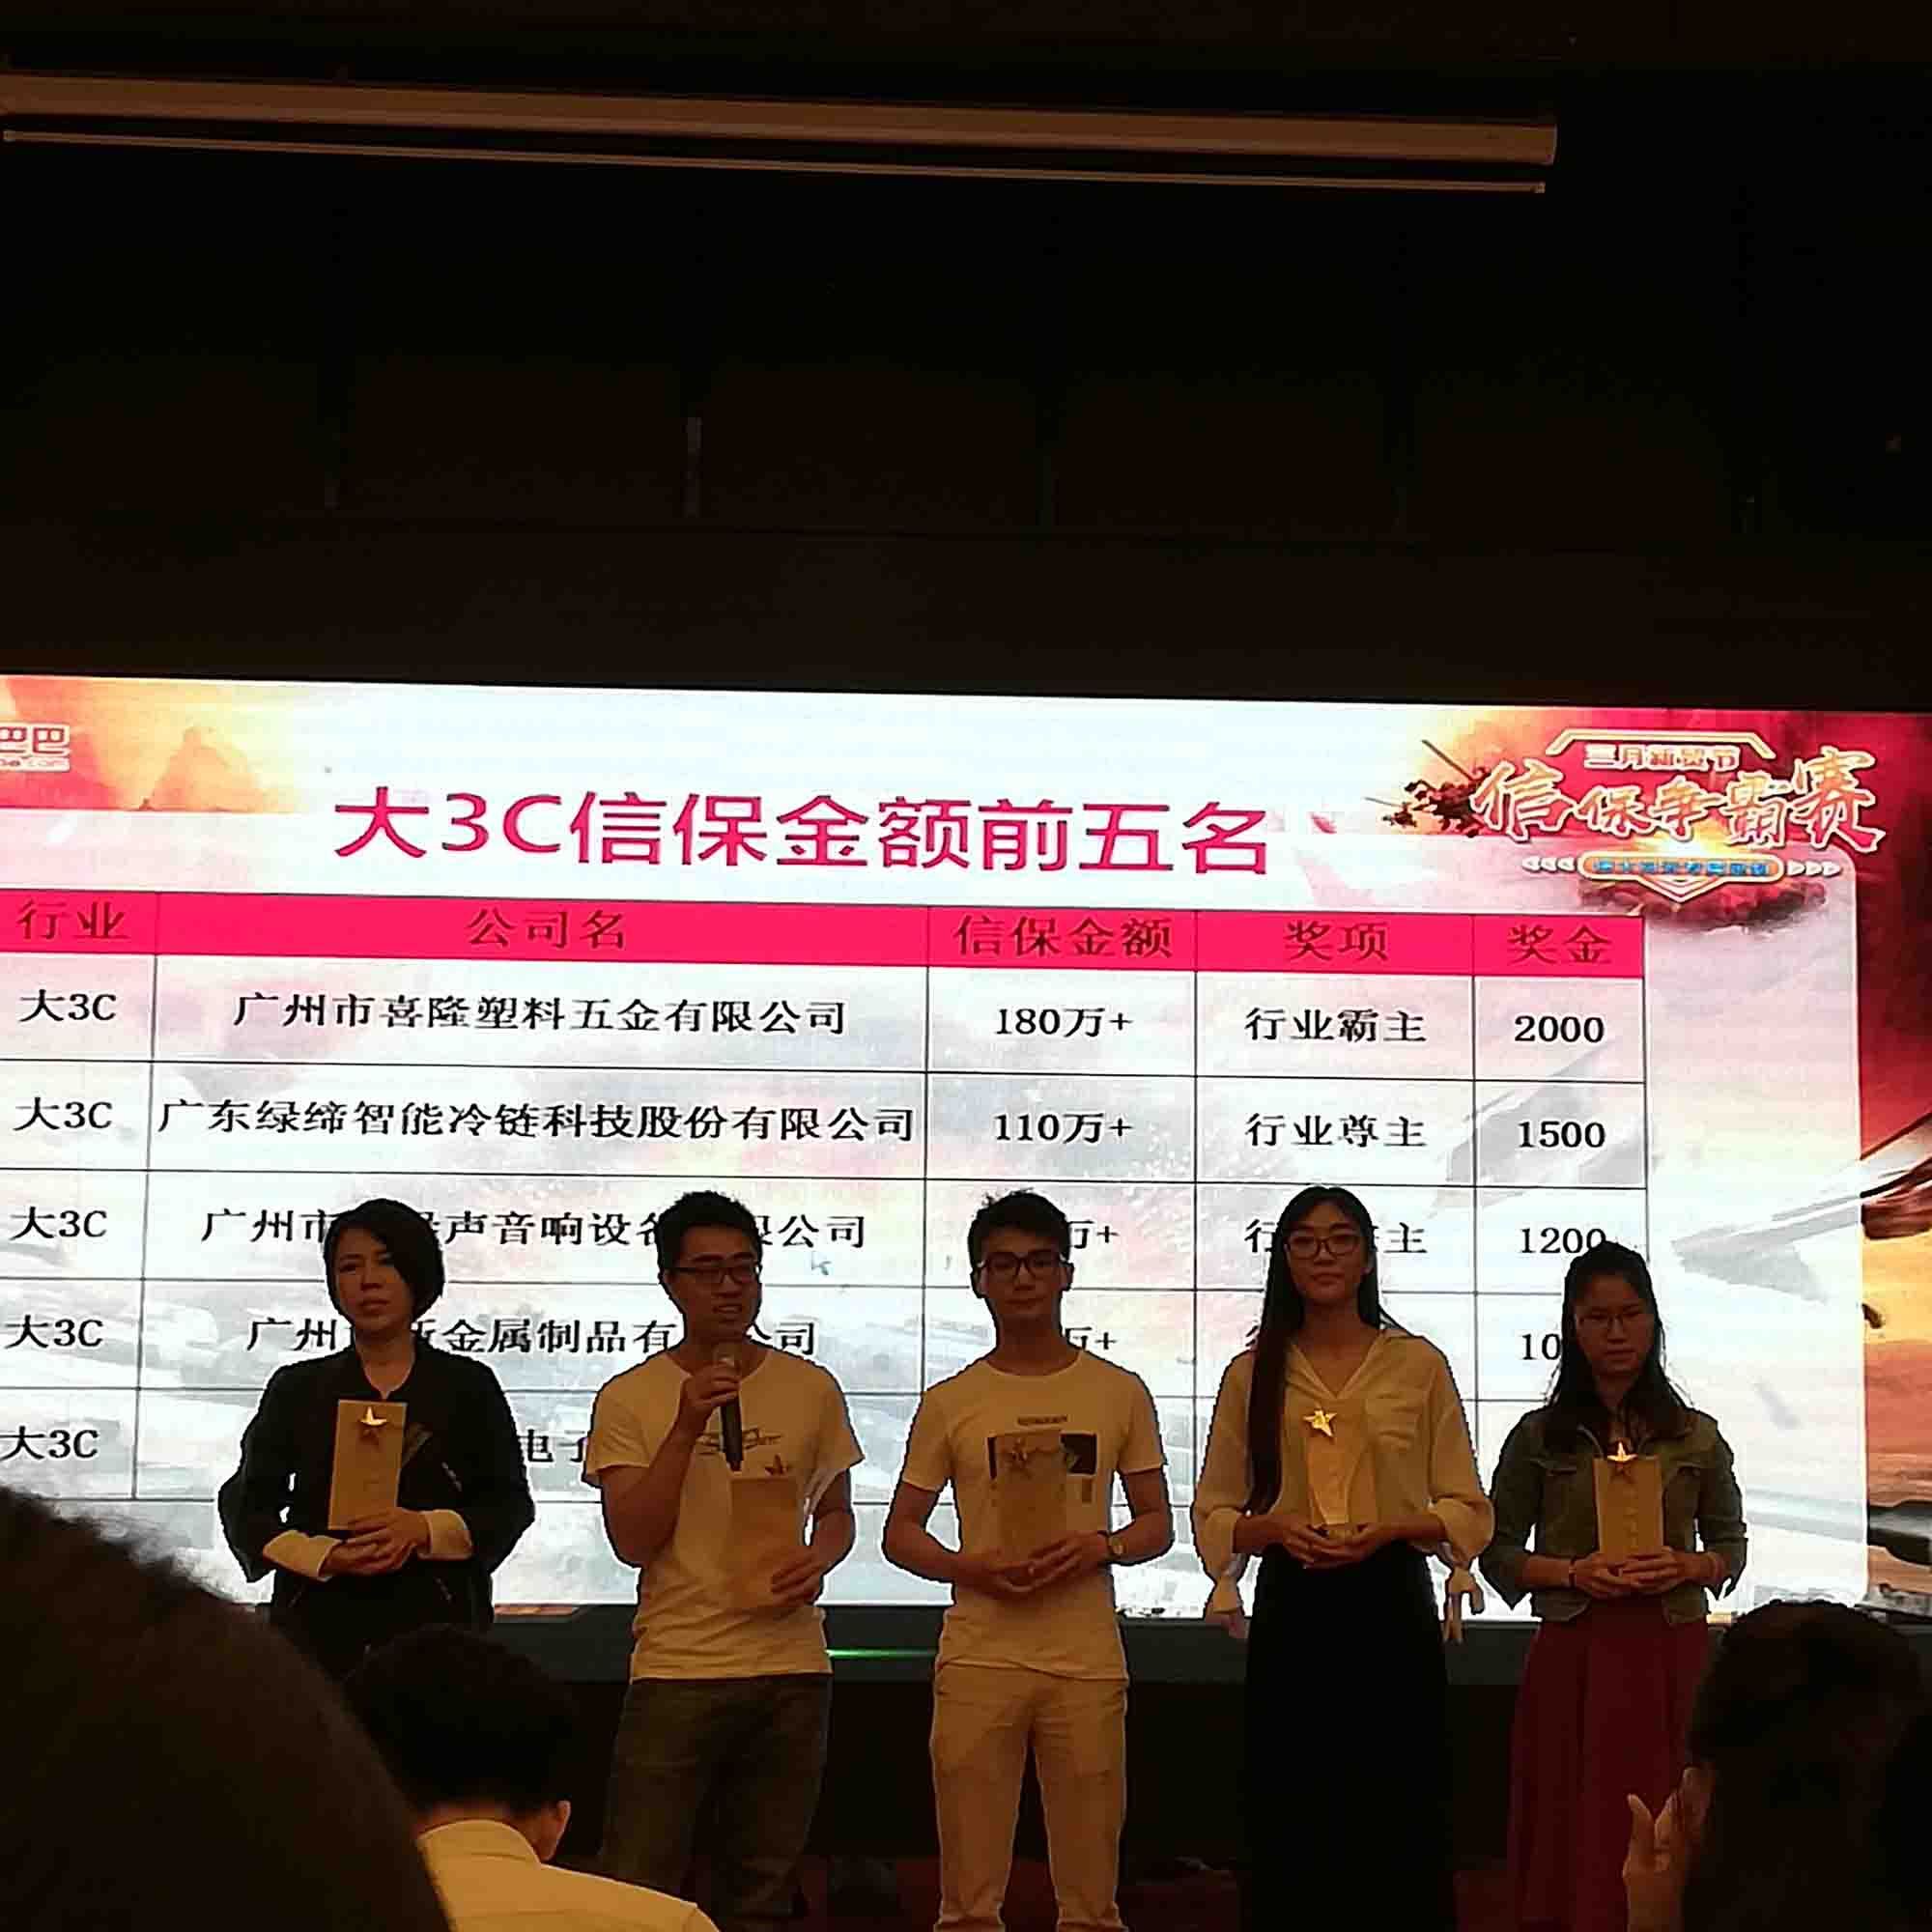 Gratuliere unserem Unternehmen Erlangte den dritten Platz beim Alibaba Trade Assurance Competition